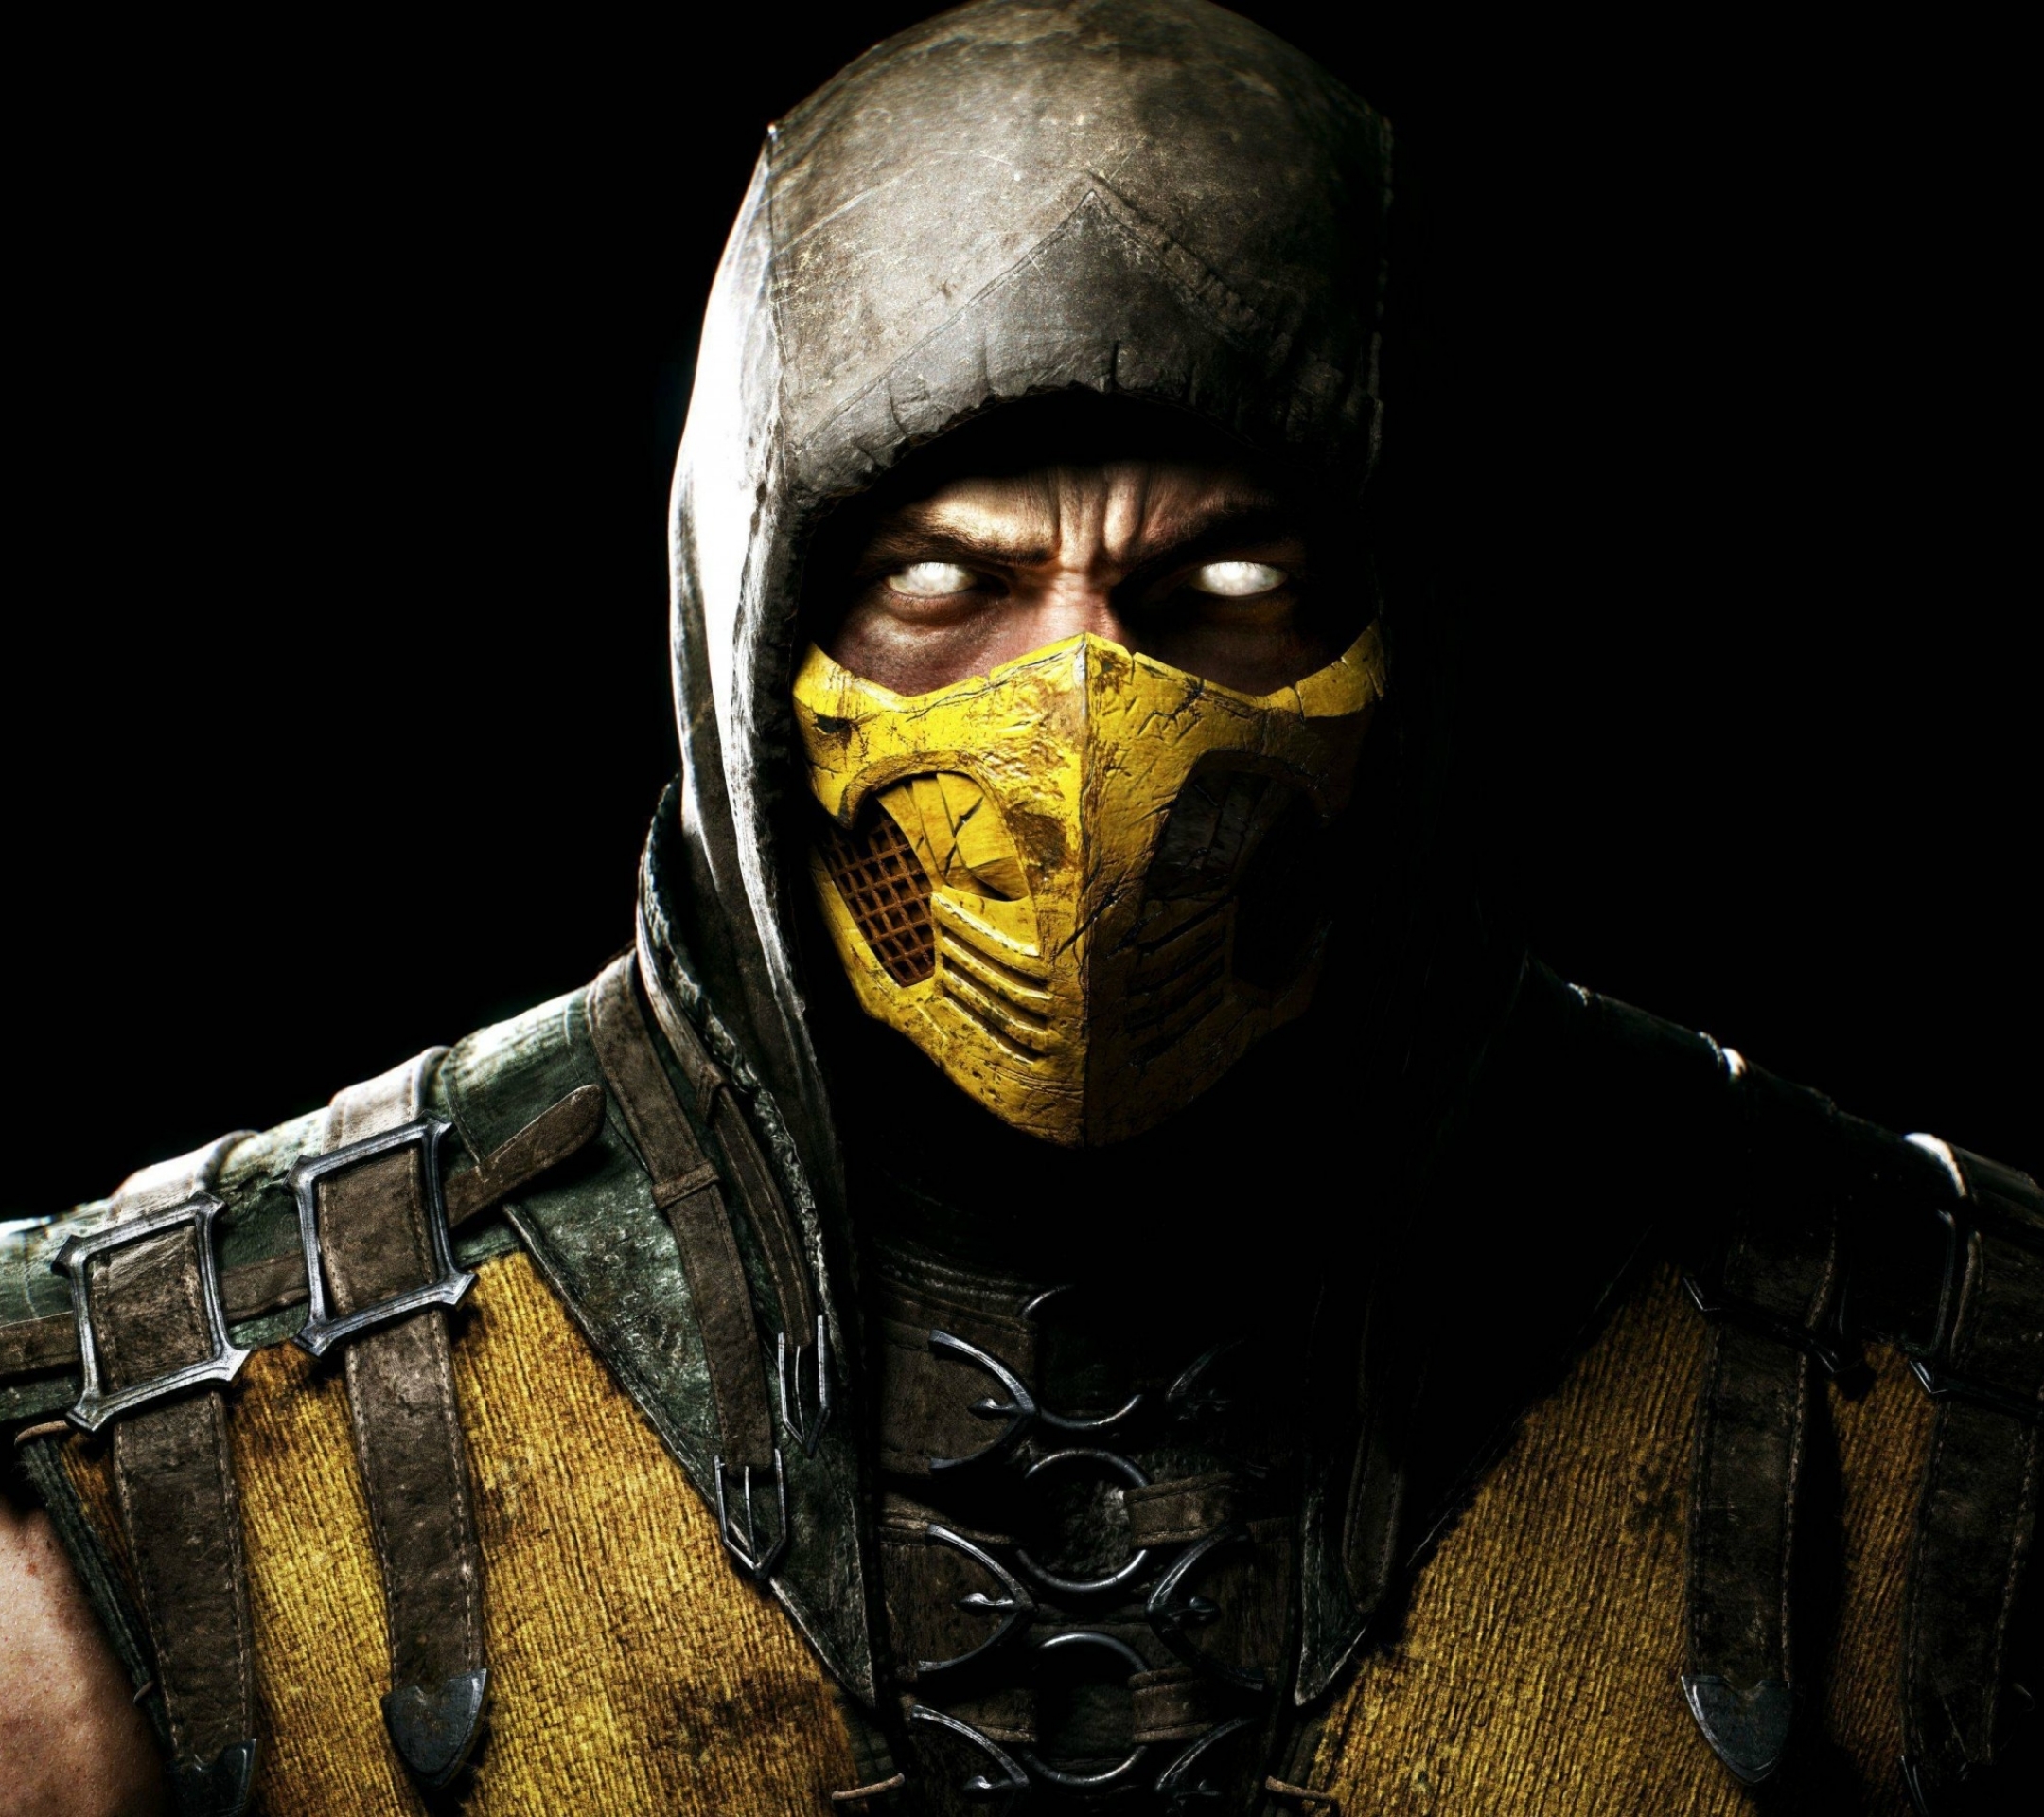 Descarga gratis la imagen Mortal Kombat, Videojuego, Escorpión (Mortal Kombat), Mortal Kombat X en el escritorio de tu PC